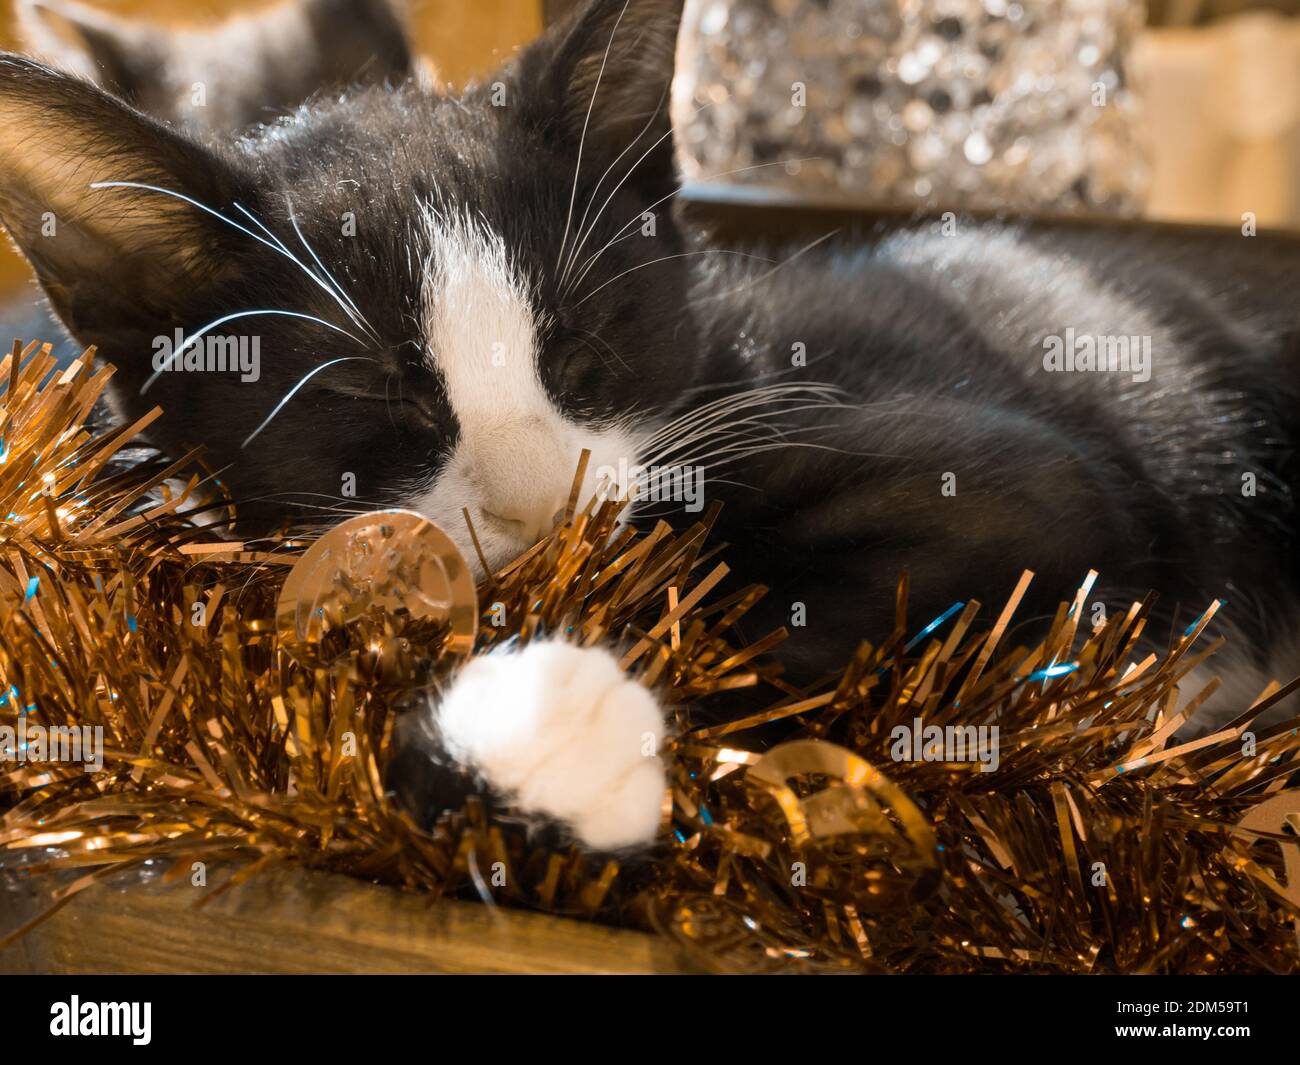 Kitten asleep with gold tinsel. Stock Photo